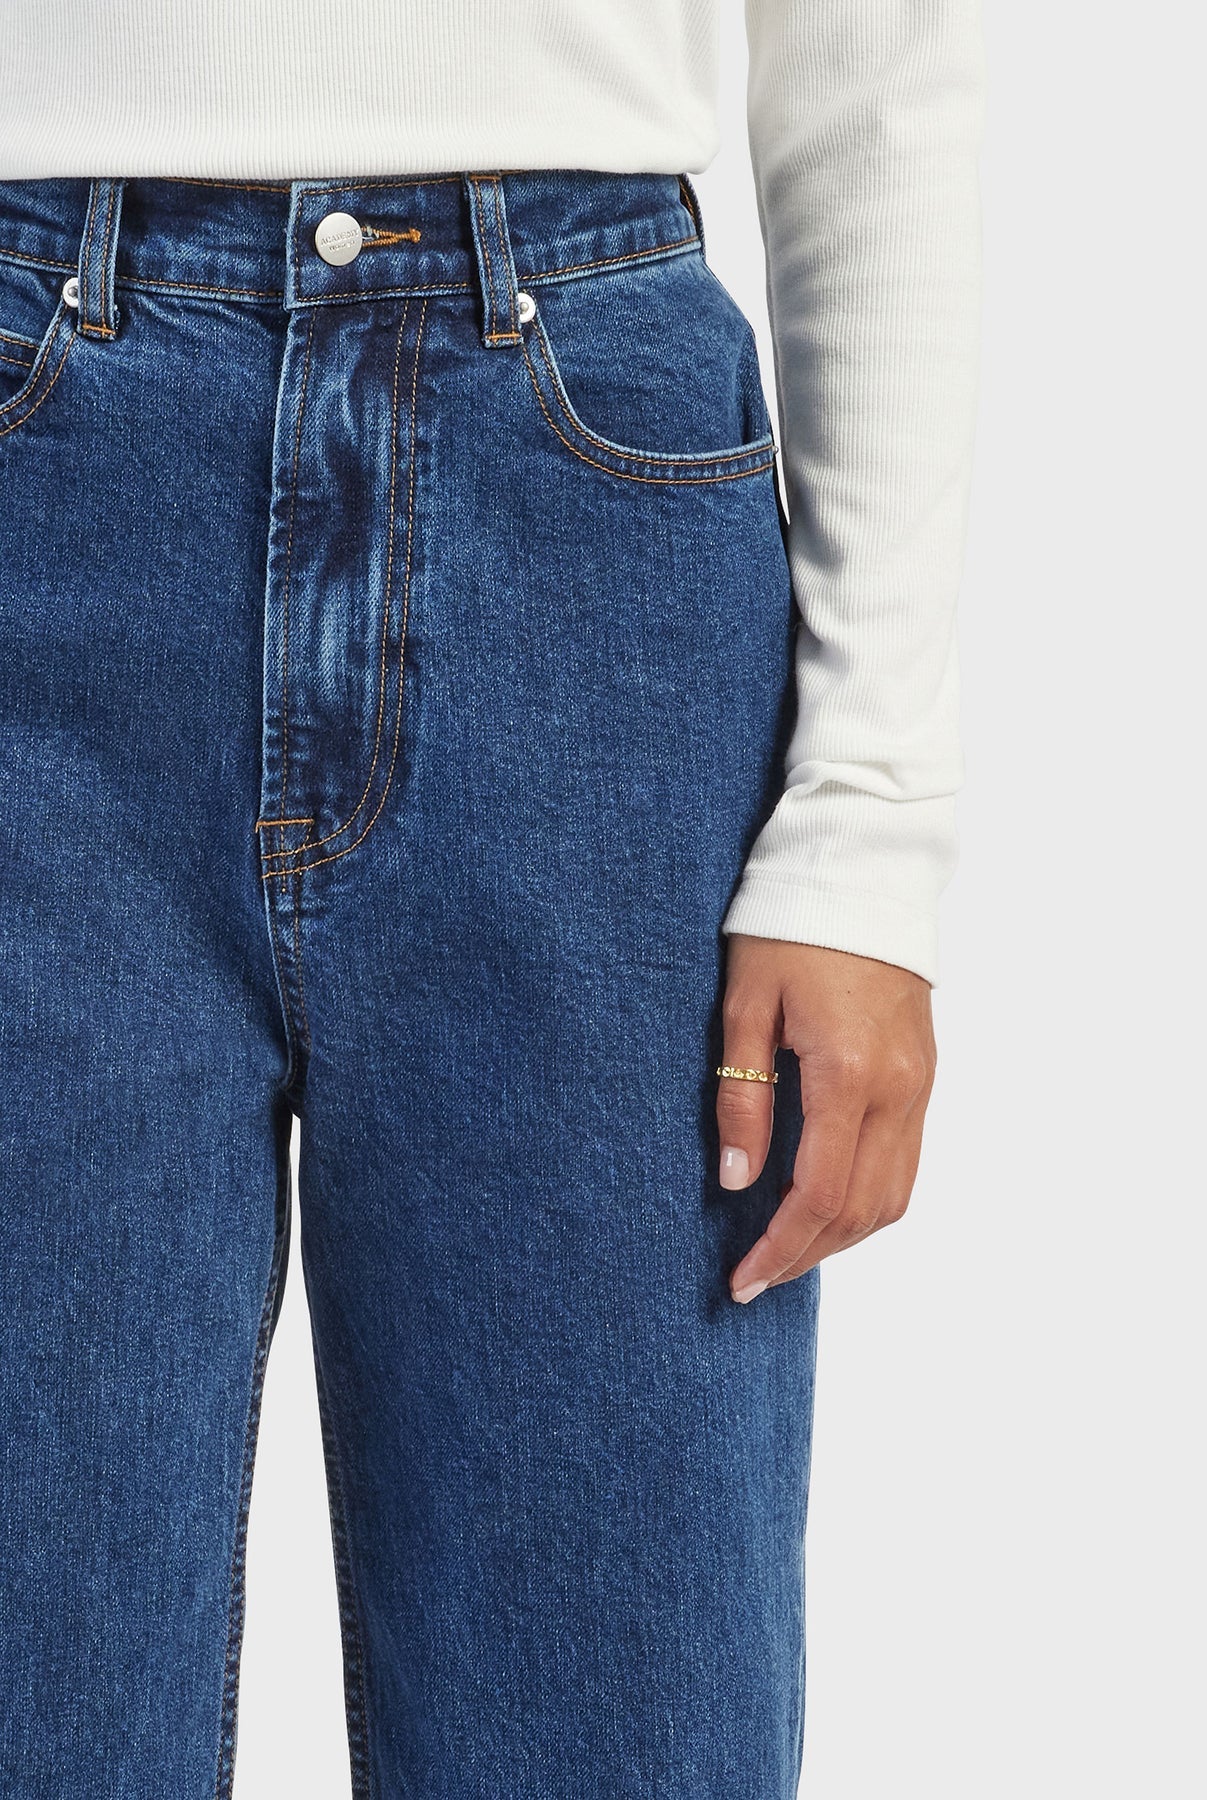 (W) Hayworth Straight Jean in Mid Wash